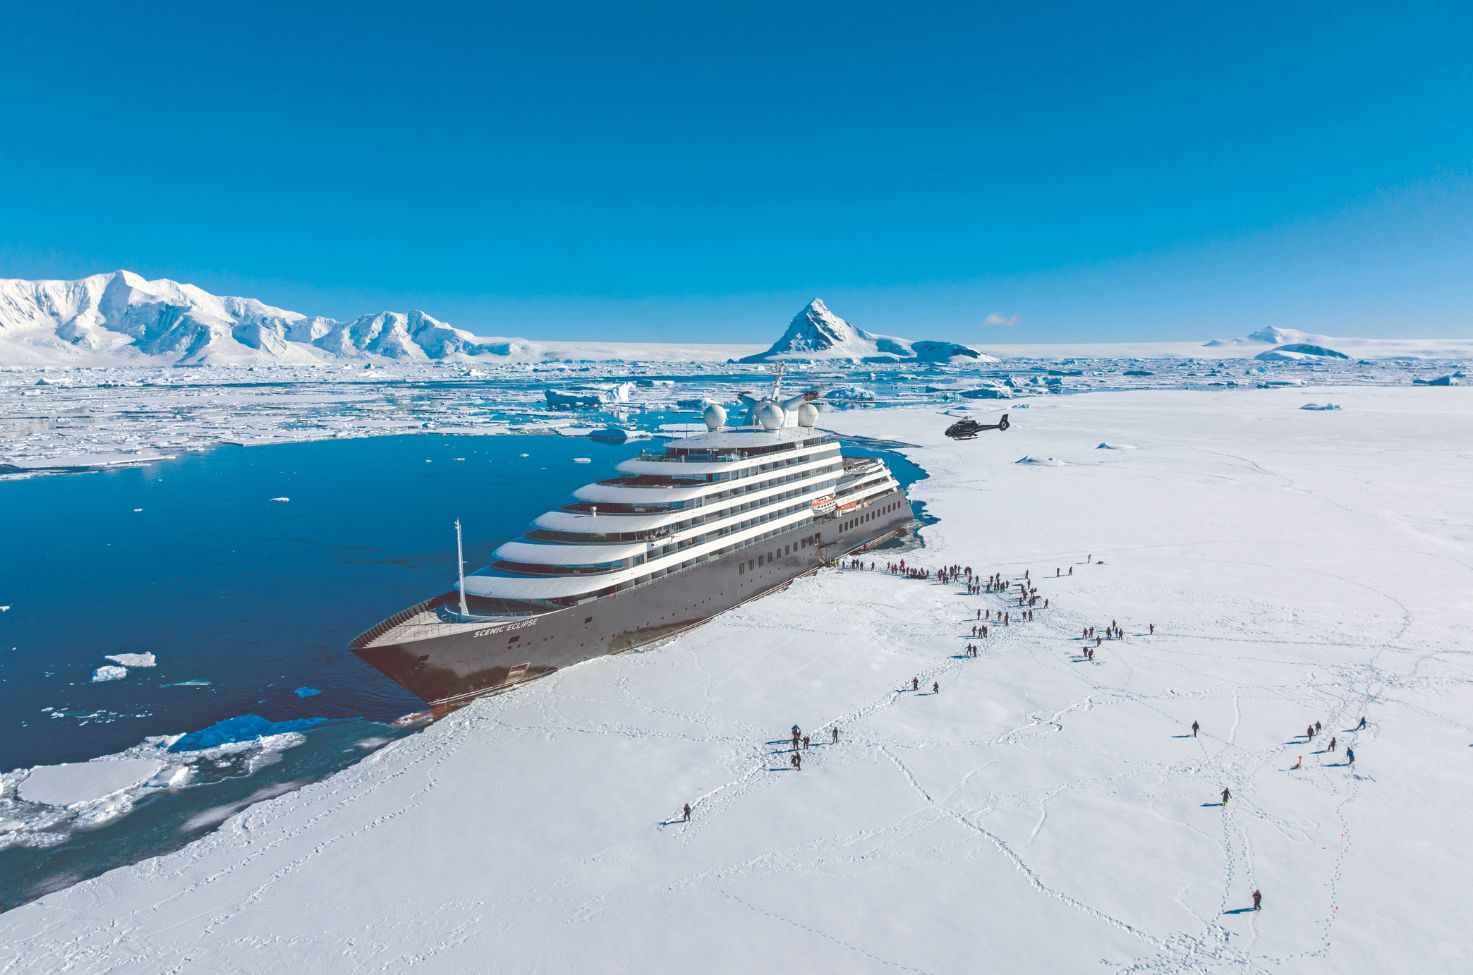 luxury yacht ship docked next to ice sheet